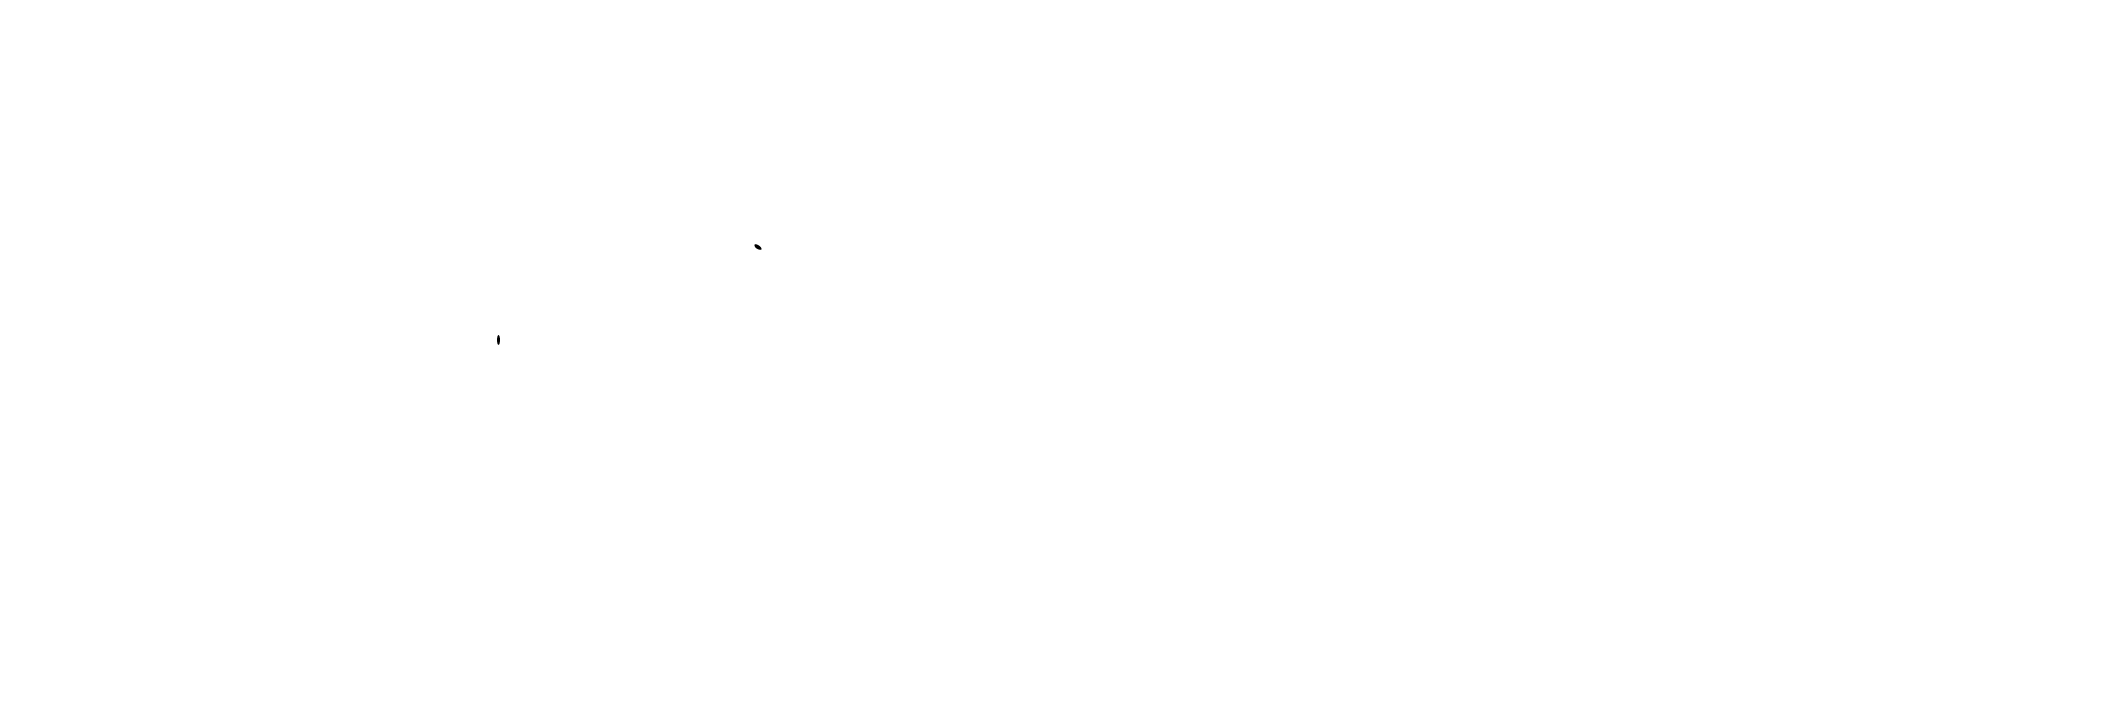 HAUXHAUXSHOP Logo 03